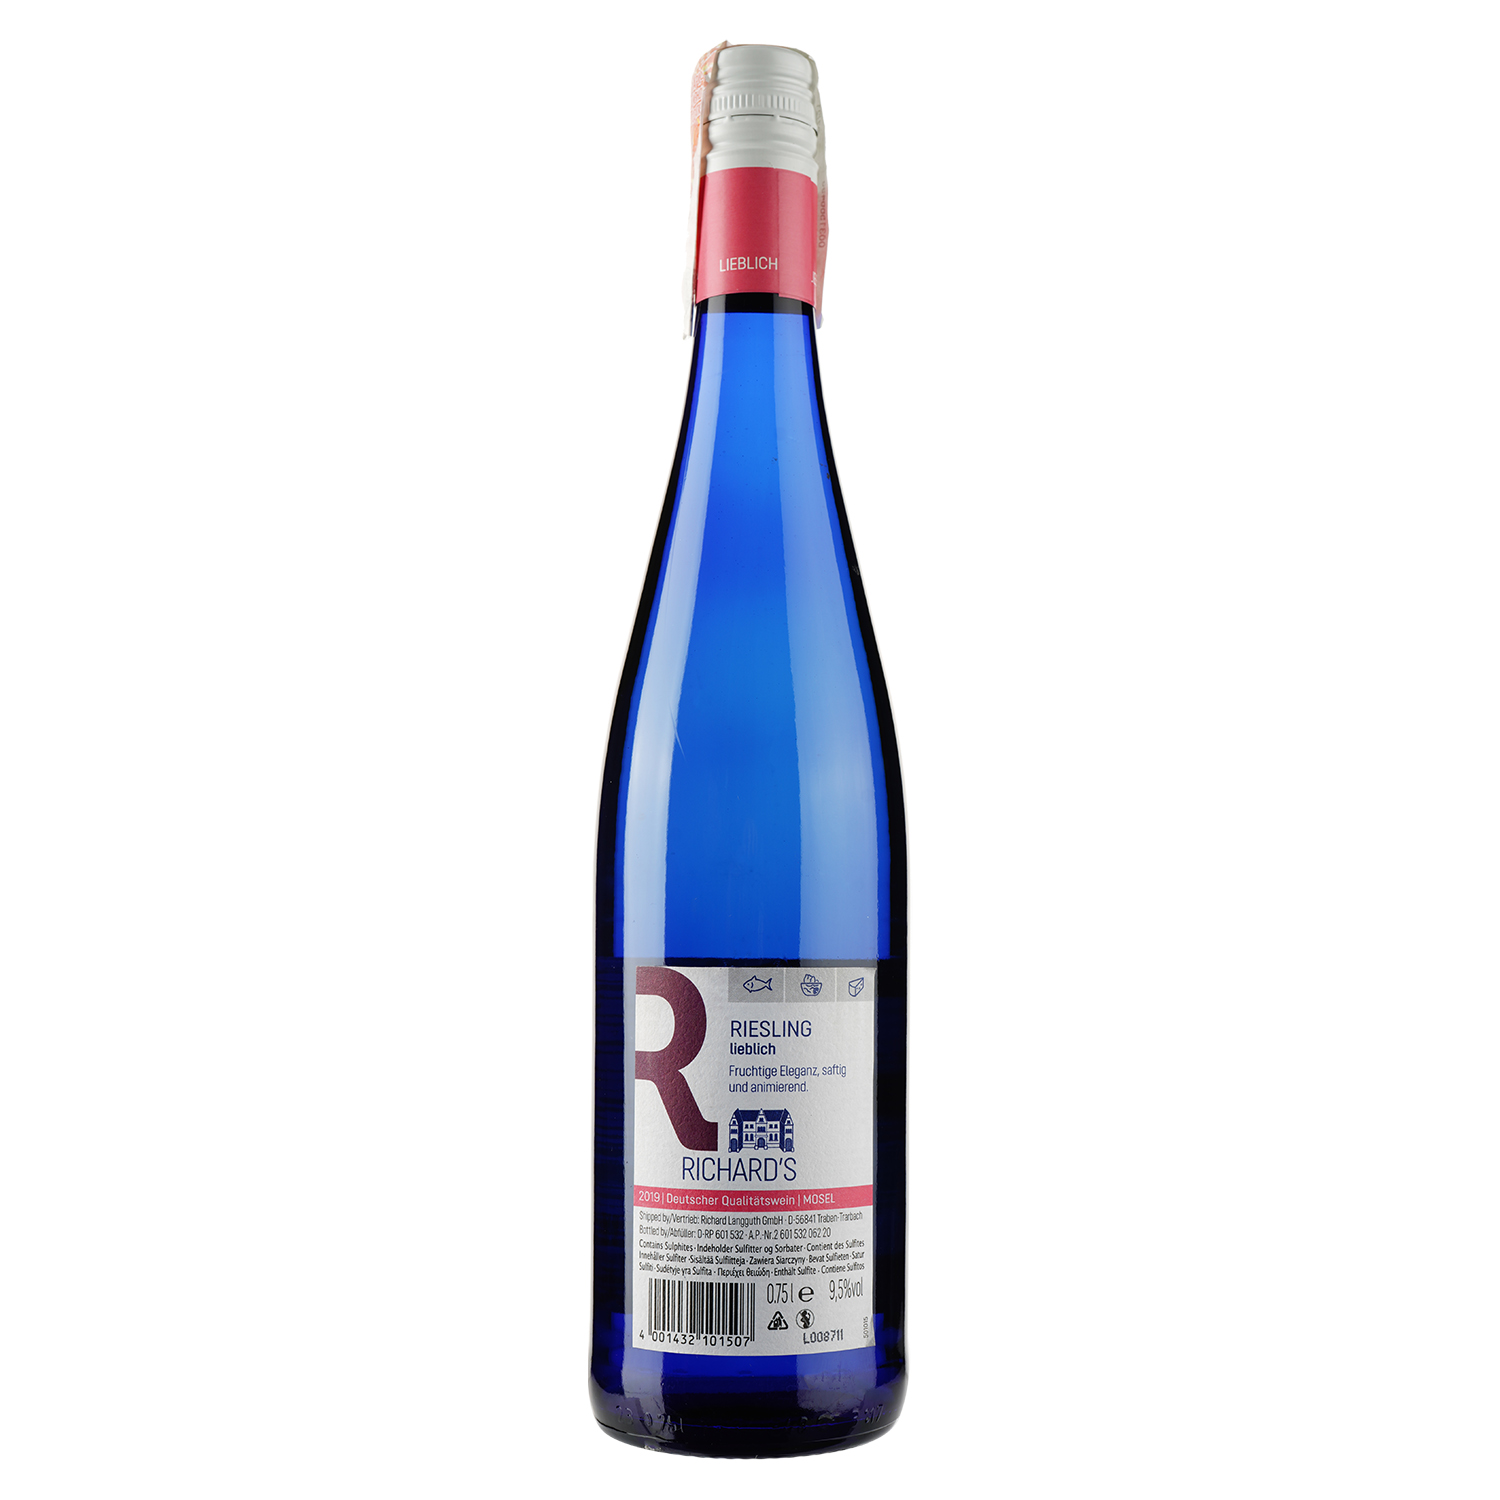 Вино Richard's Riesling Lieblich, белое, сладкое, 9,5%, 0,75 л - фото 2